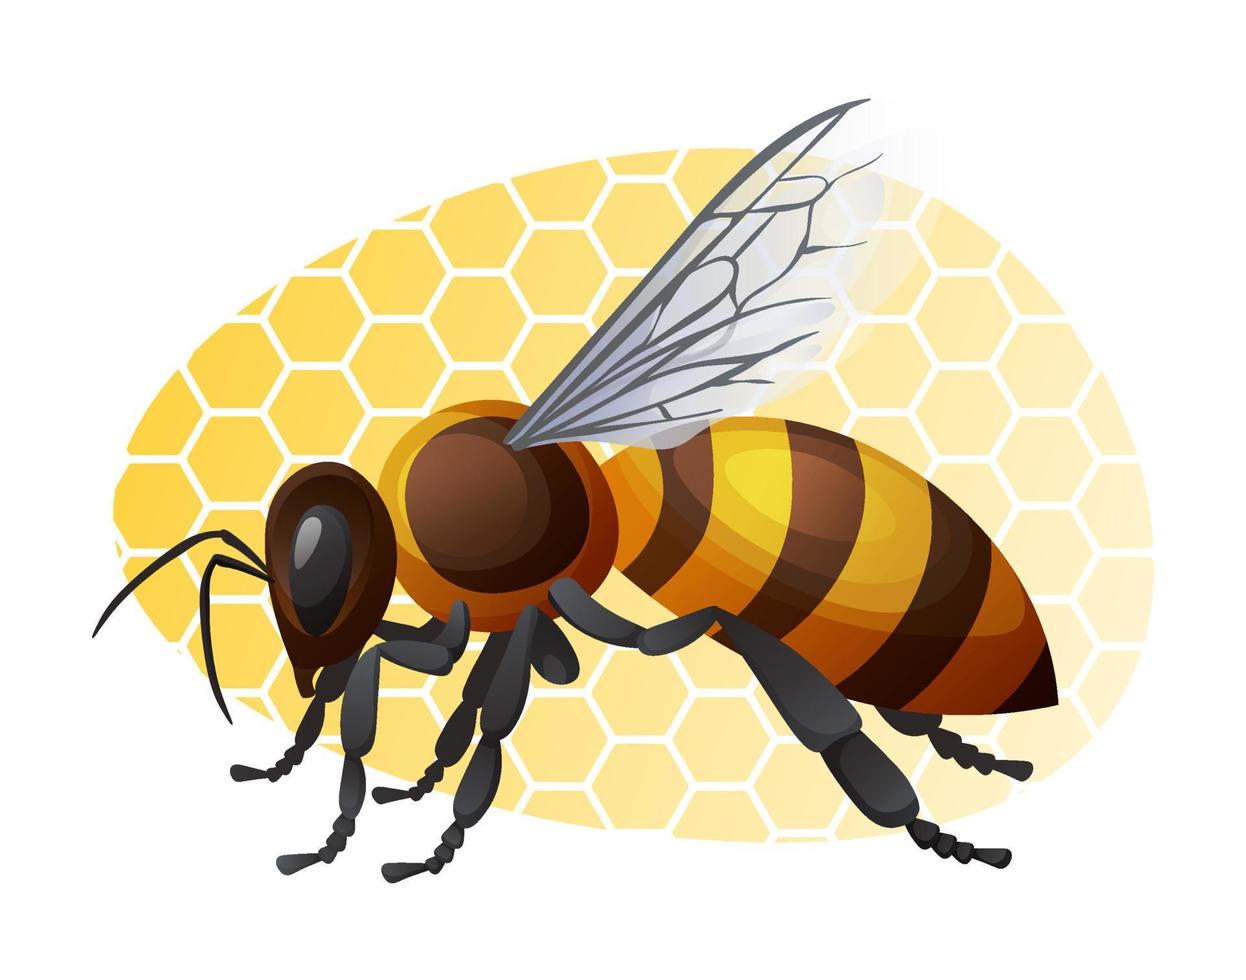 abeja de miel sobre un fondo amarillo. ilustración de insectos rayados aislado sobre fondo blanco. pegatina, impresión, logotipo vector